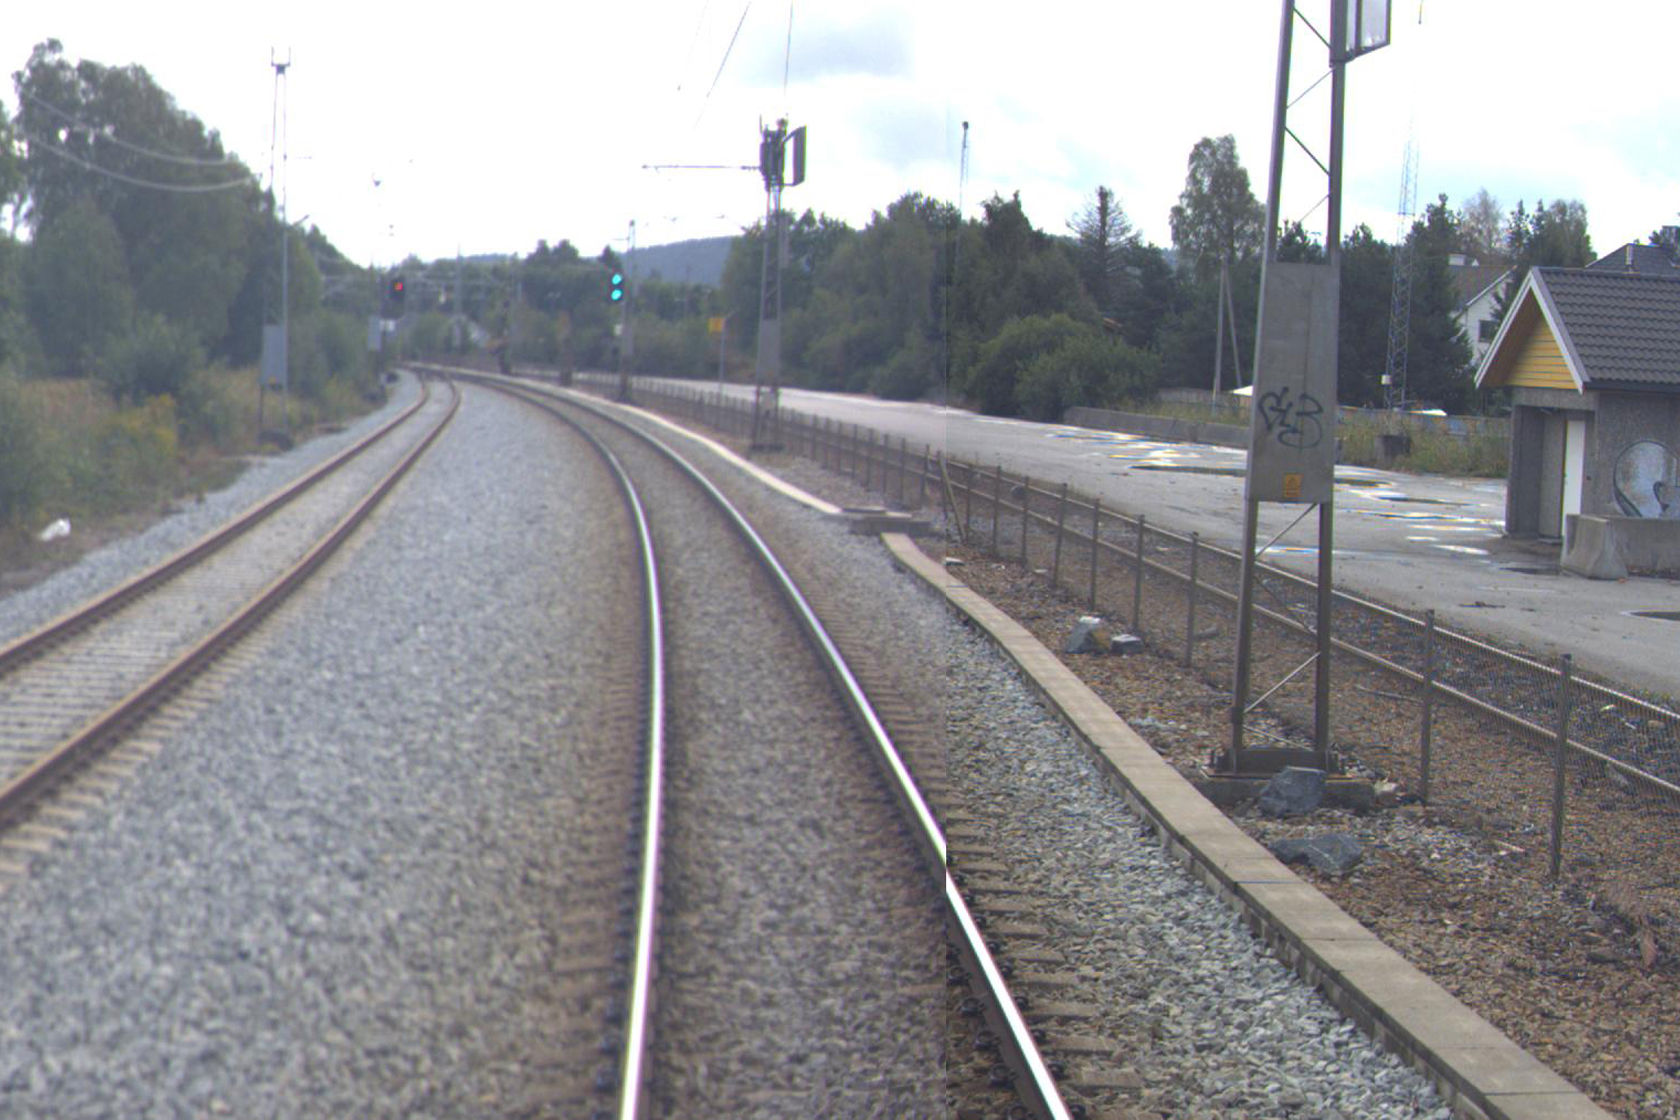 Tracks and platform at Berg station